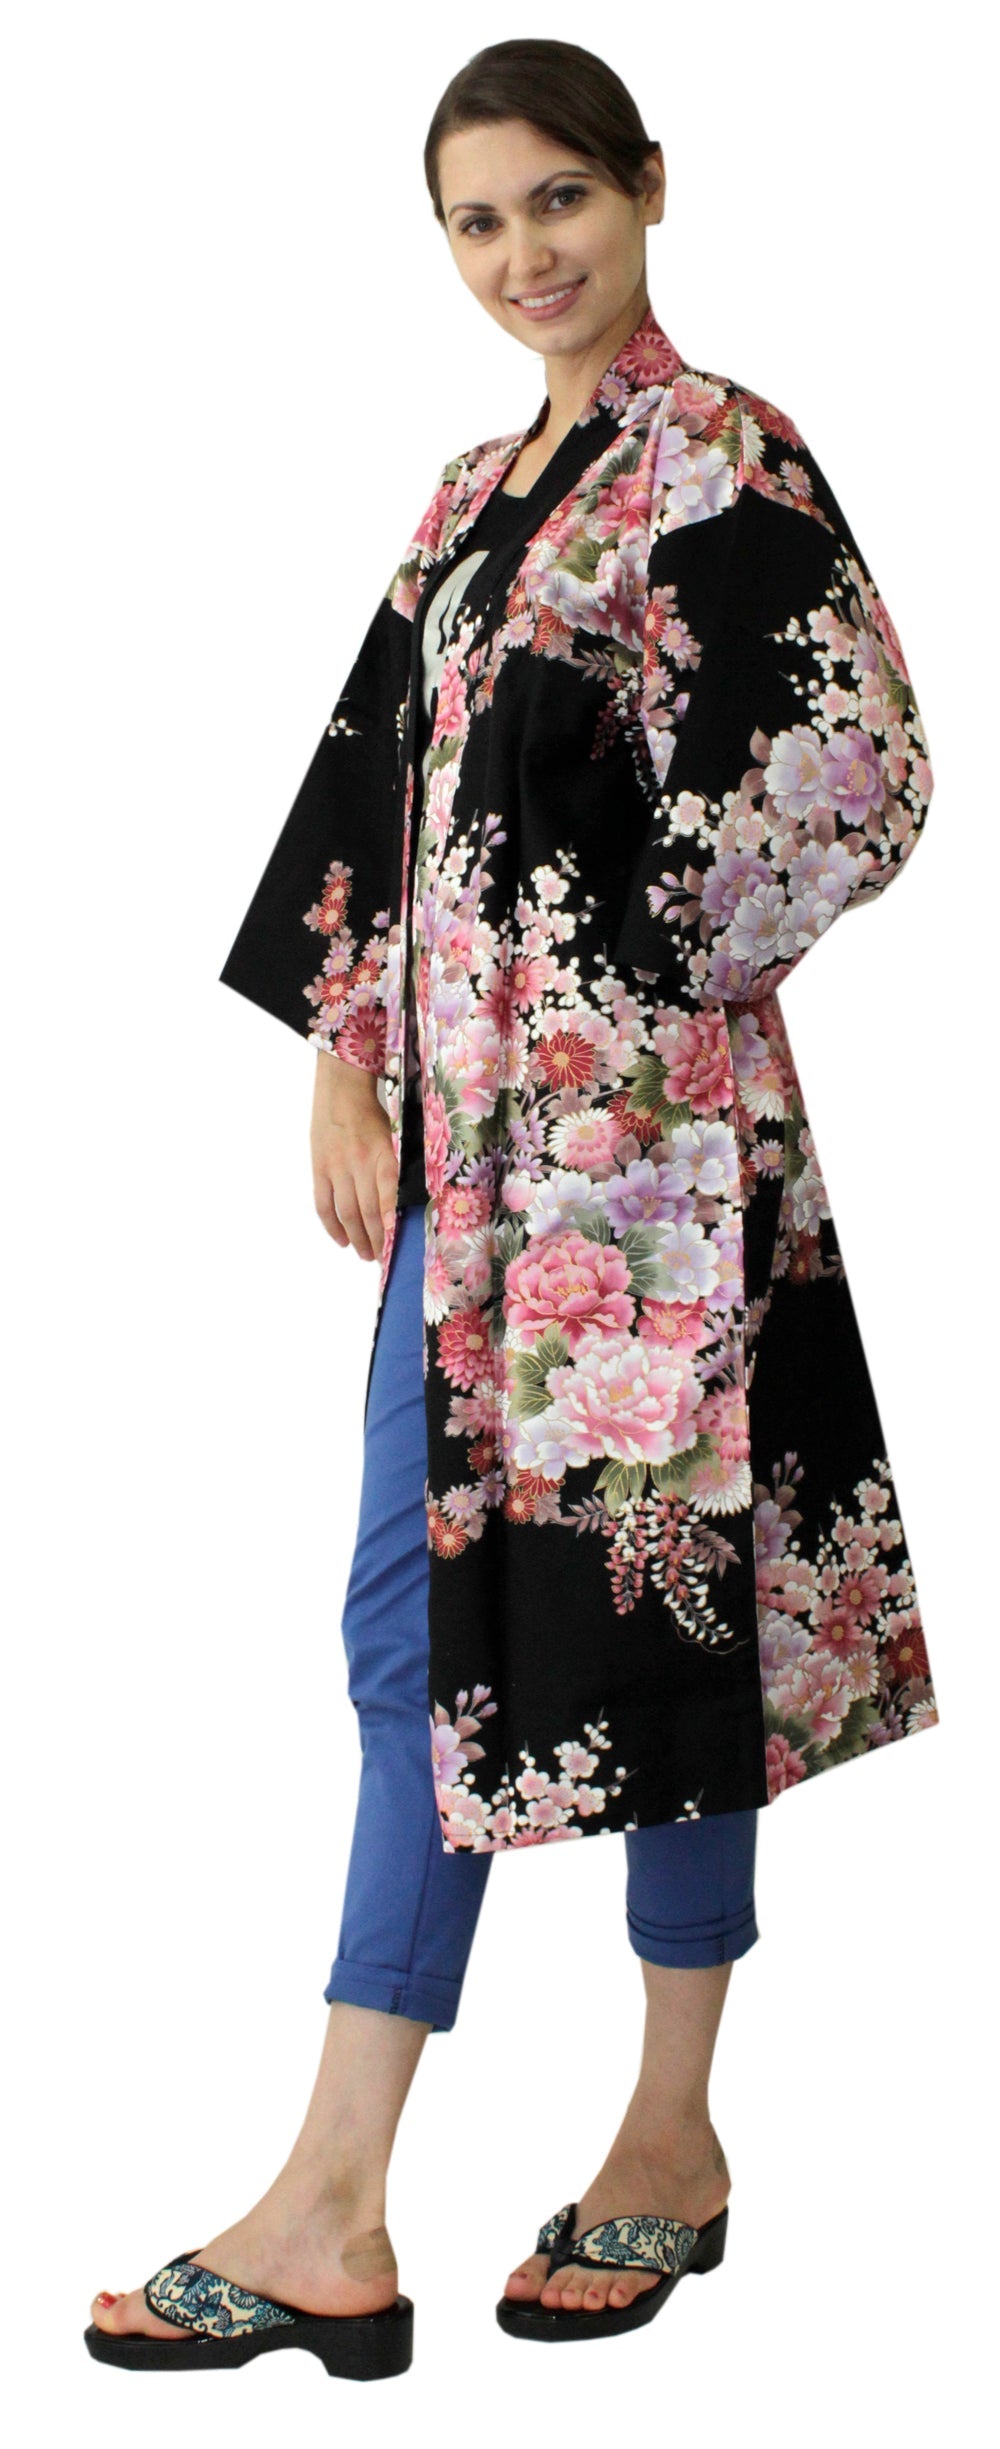 Women's Happi Coat: Kimono Robe - Flowers in Bloom Black